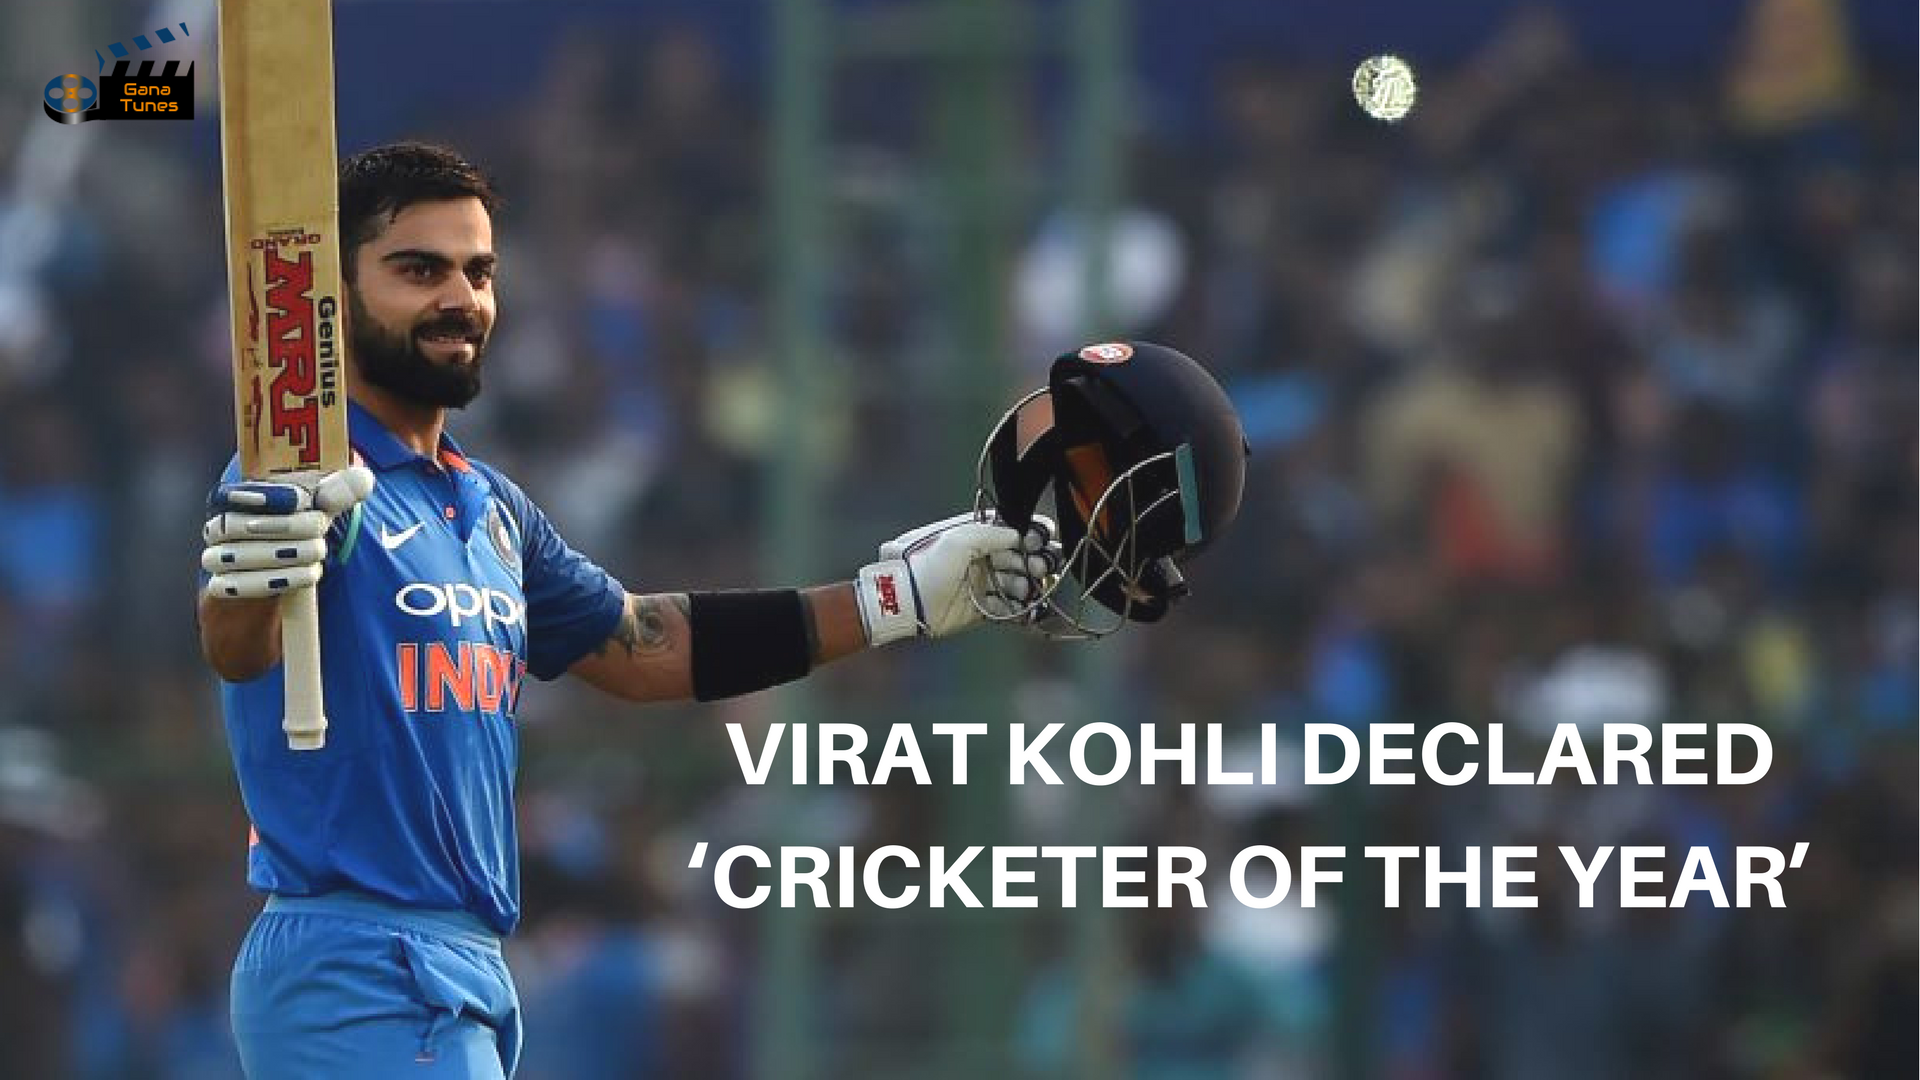 Cricketer of the year Virat Kohli